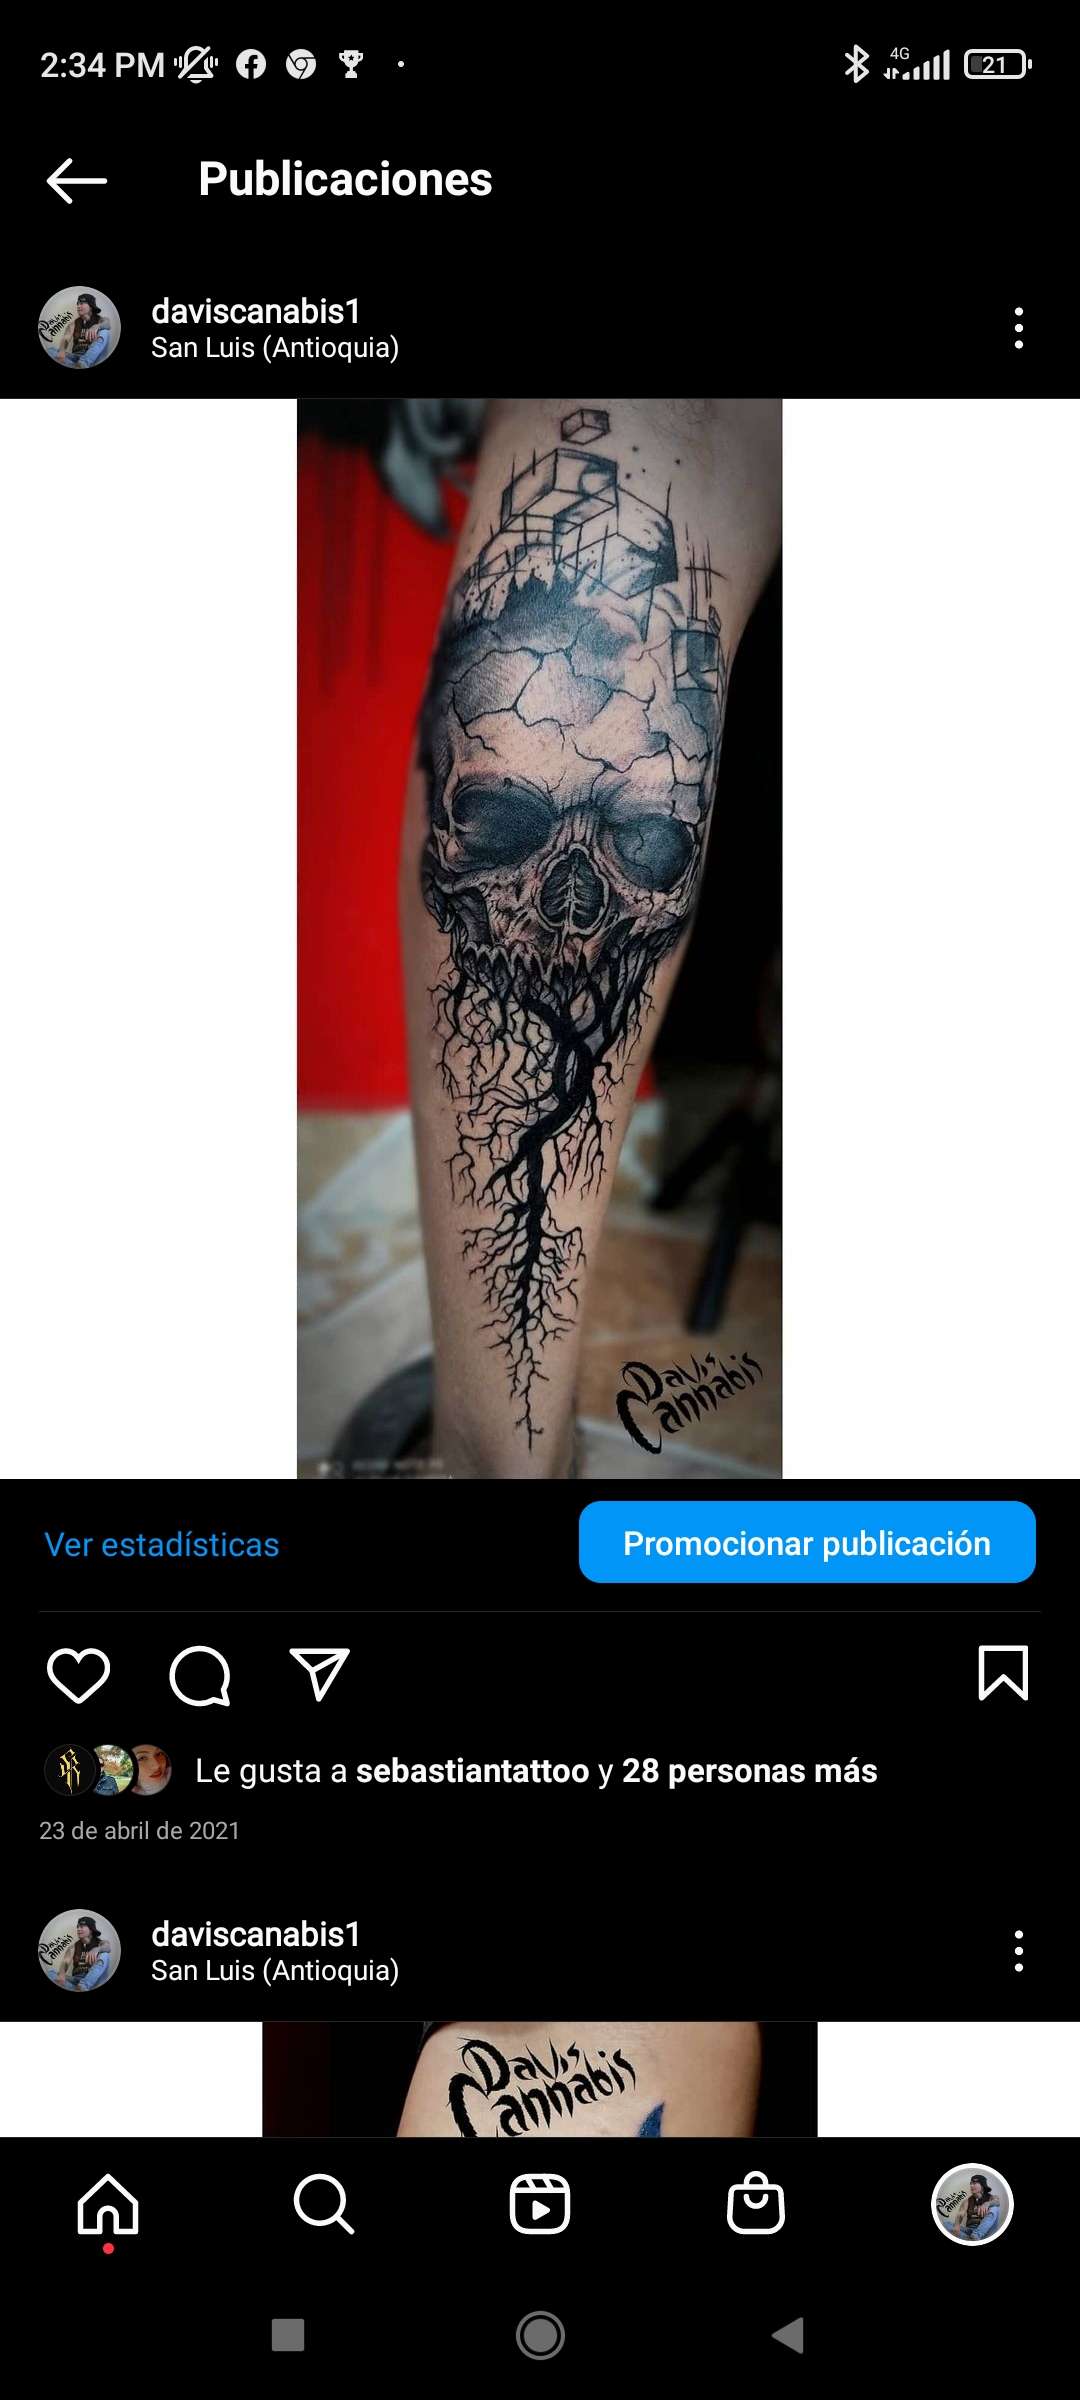 davis cannabis tattoo art - Madrid - Tiendas de piercings